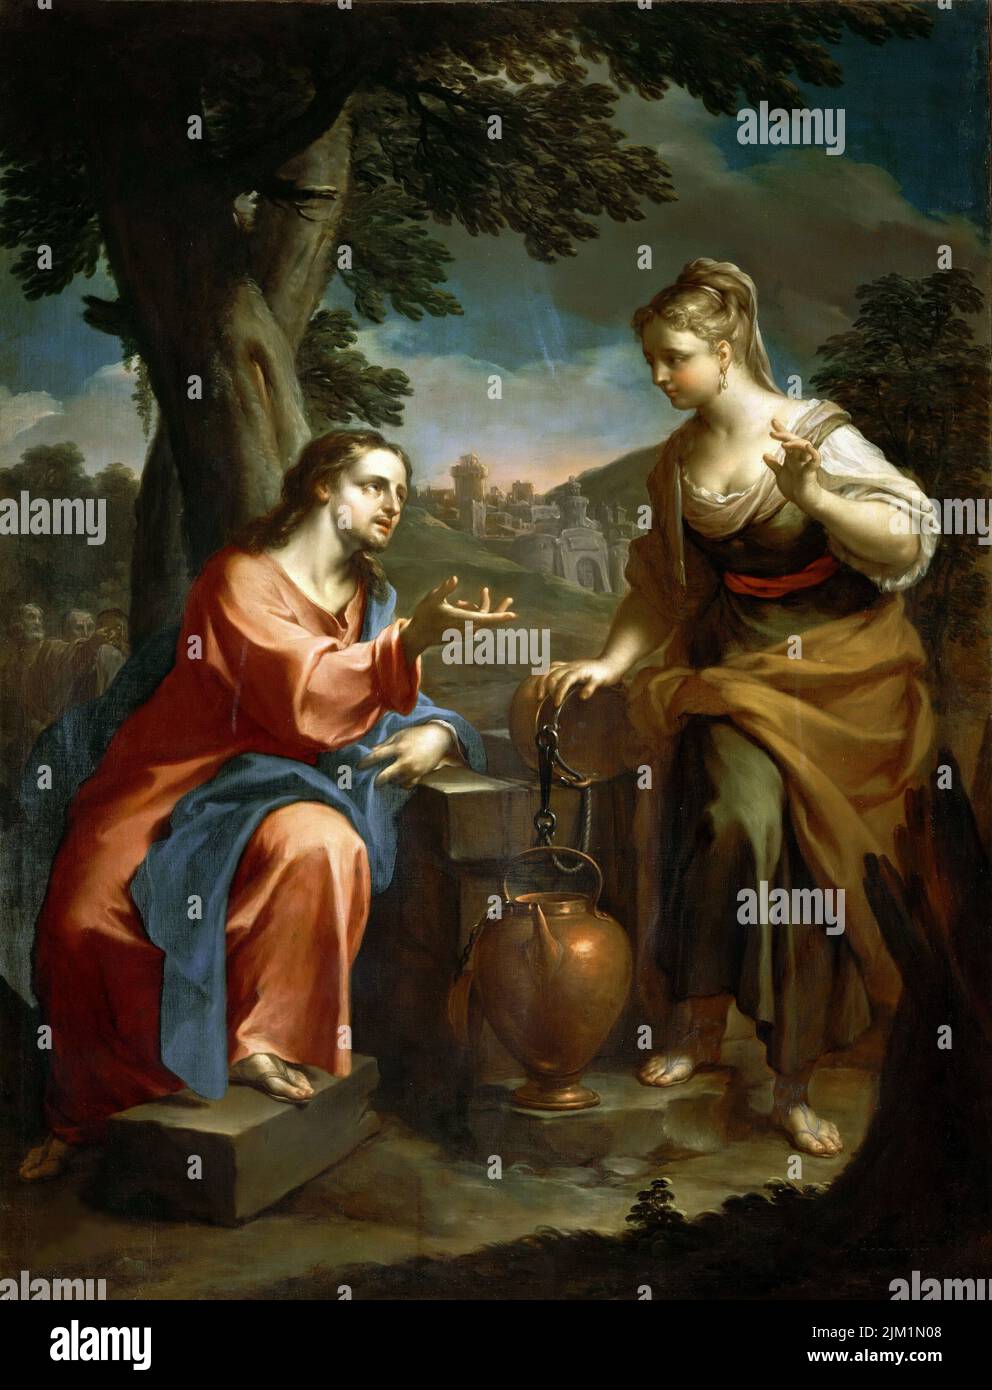 Christ and the Samaritan Woman. Museum: Musei Vaticani in Viale Vaticano, Rome. Author: FRANCESCO TREVISANI. Stock Photo